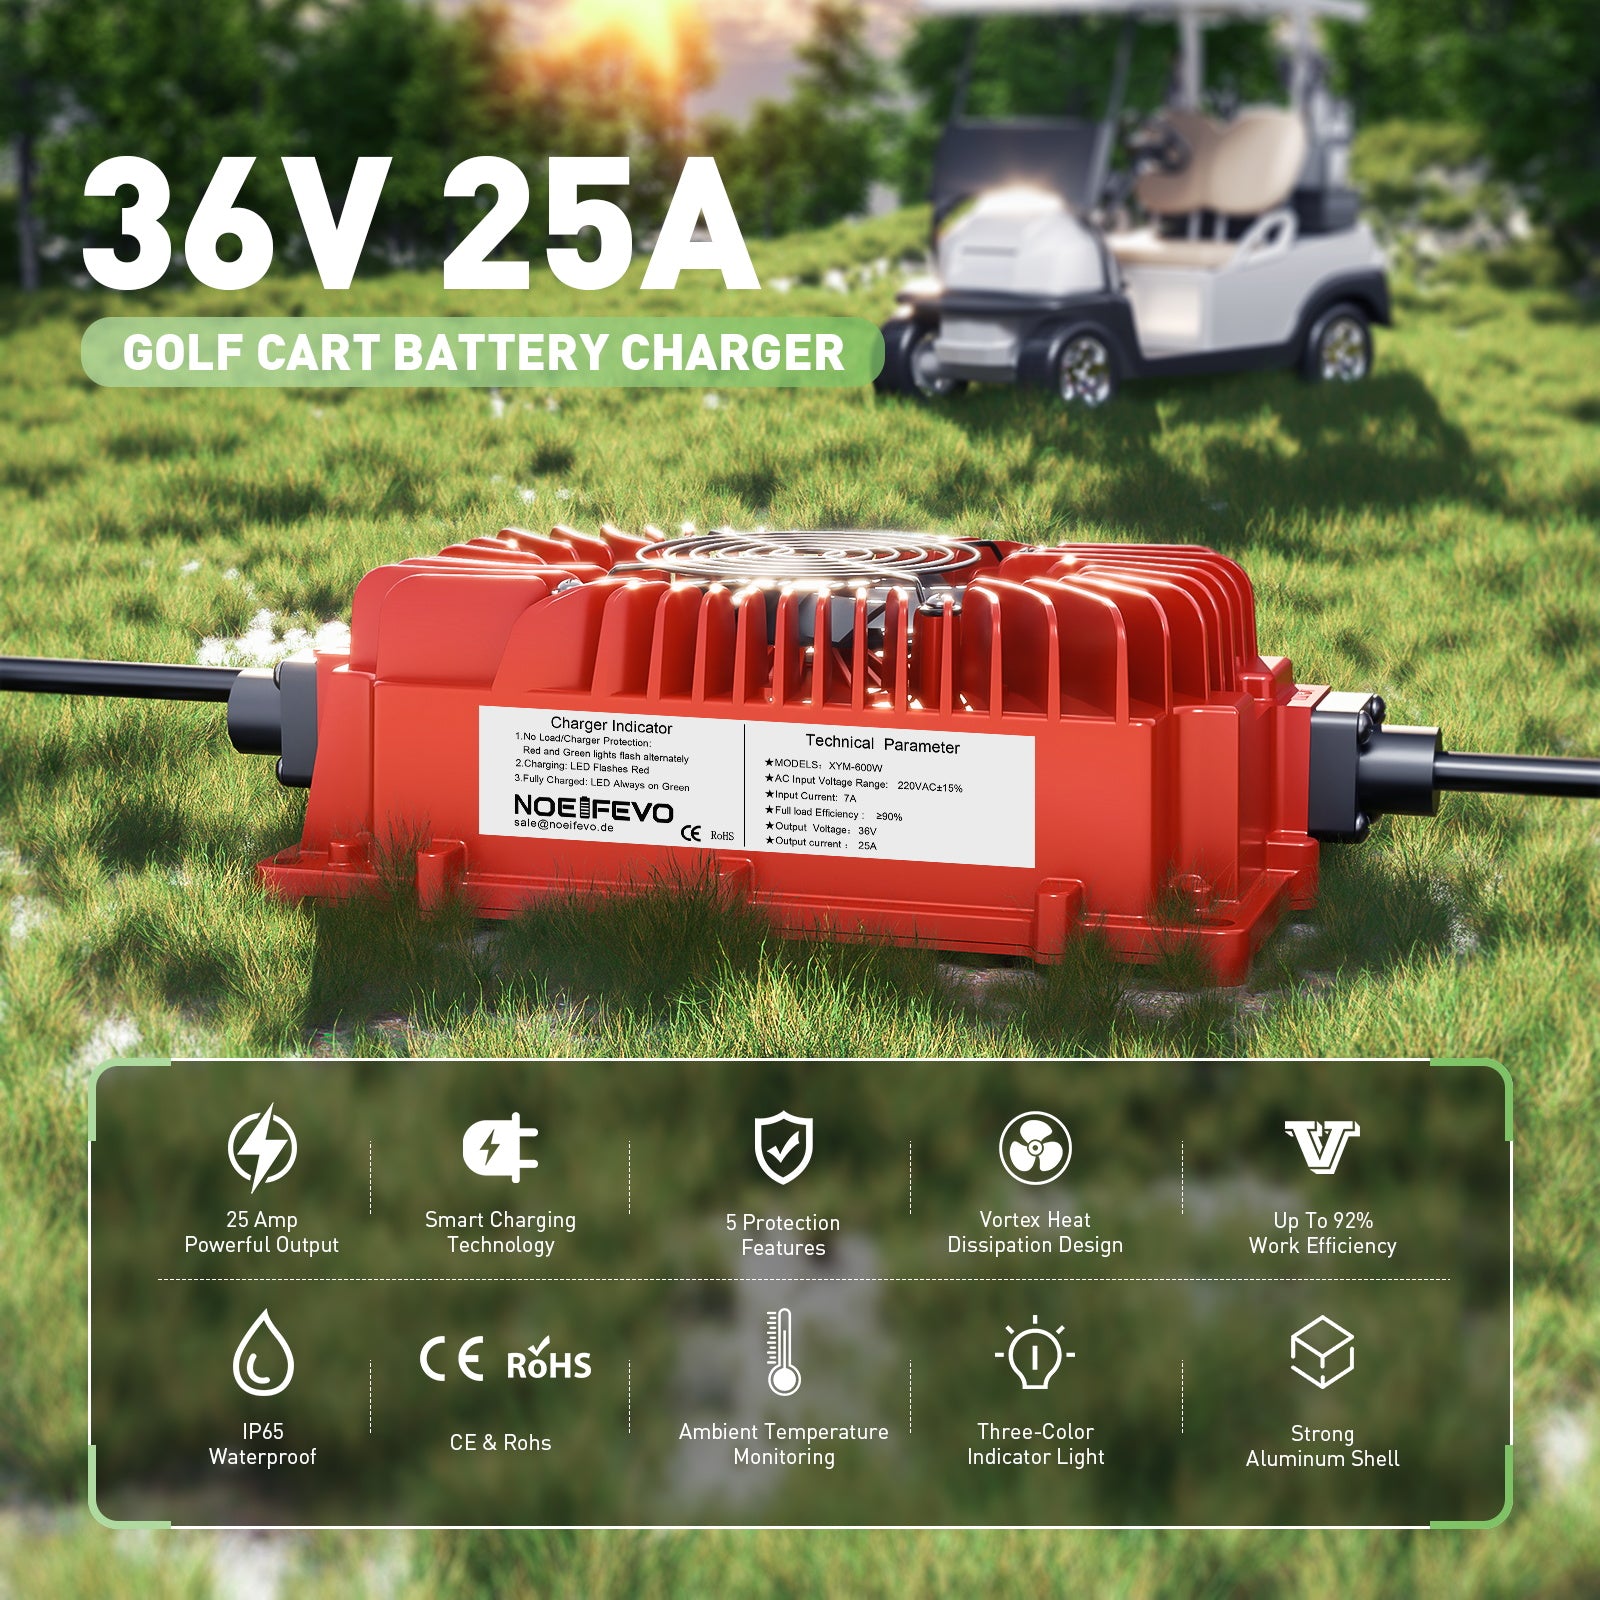 NOEIFEVO 36V 25A Golfwagen-Batterieladegerät mit EZGO TXT D-Stecker für Blei-Säure-Batterien, AGM, Gel